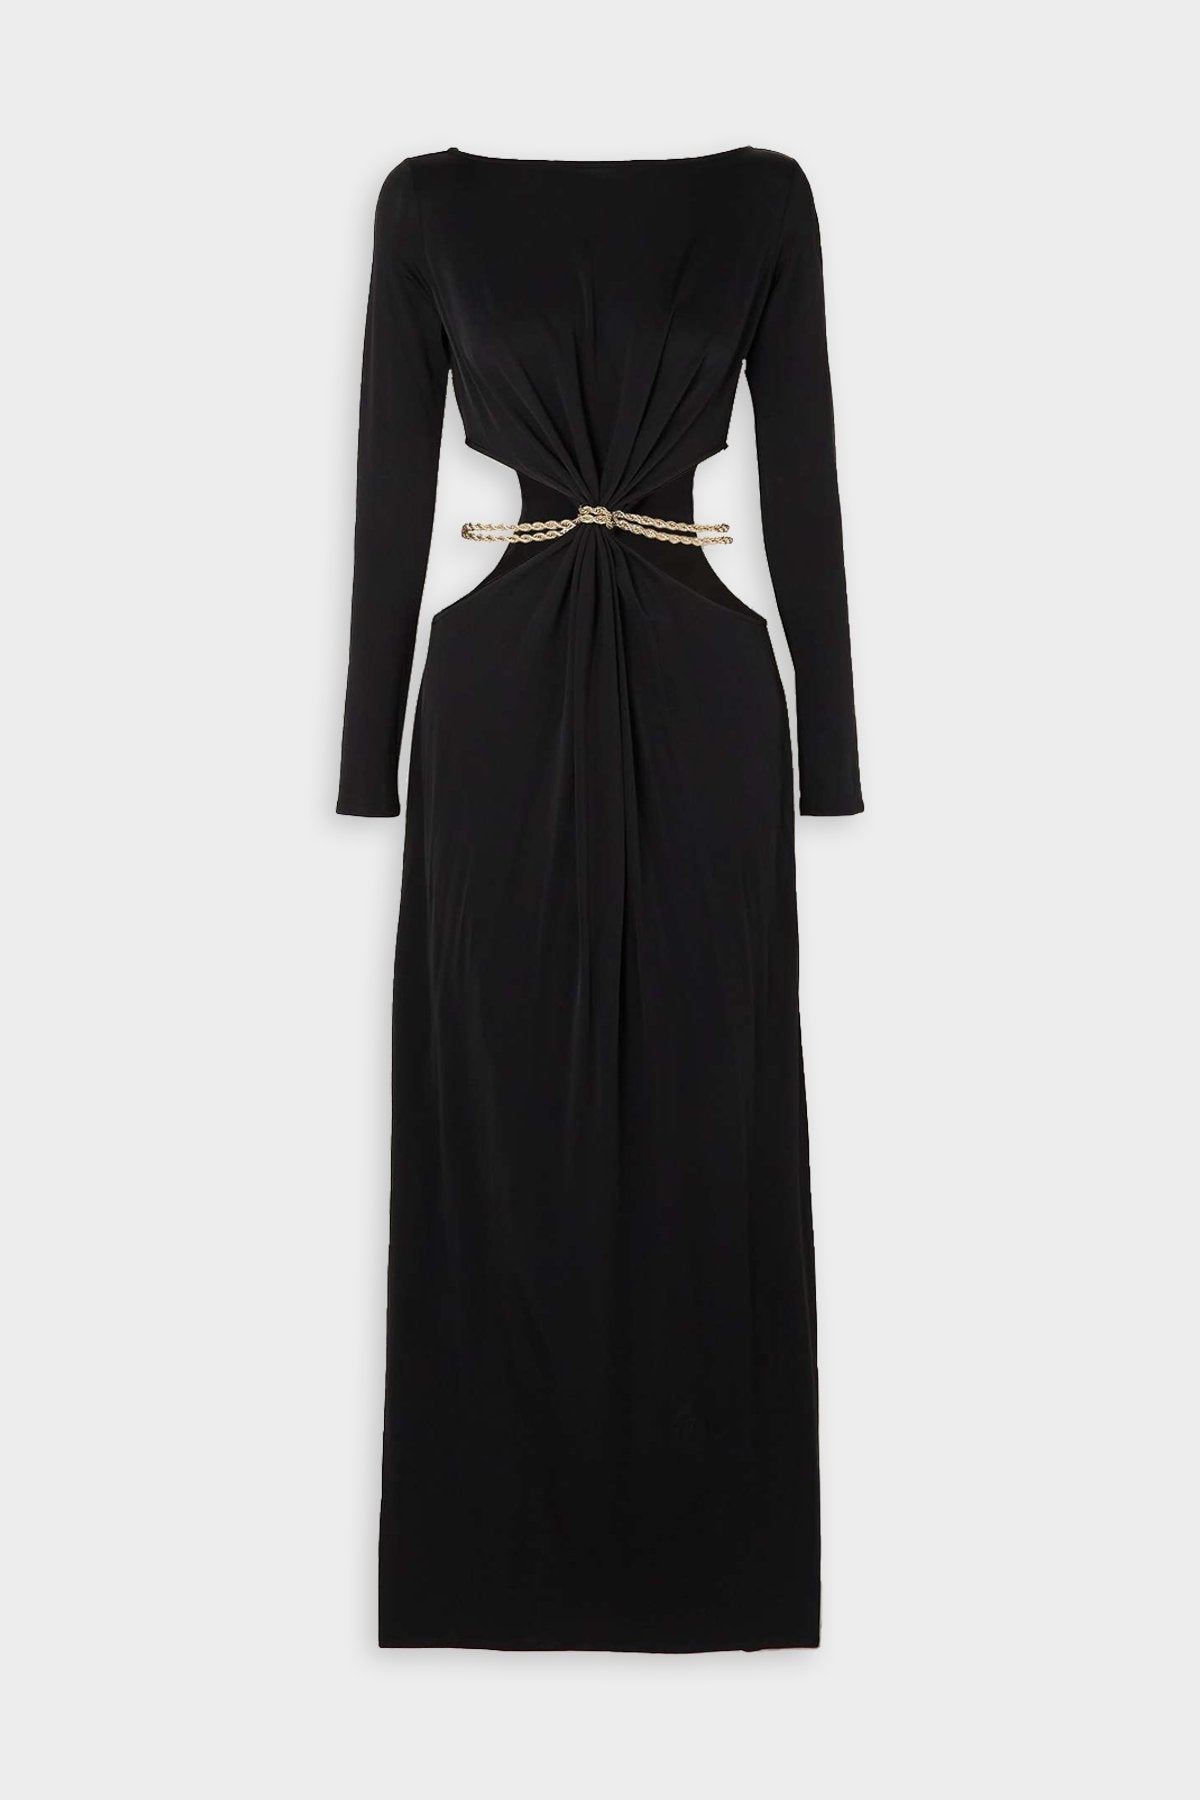 Grecia Gown in Black - shop-olivia.com